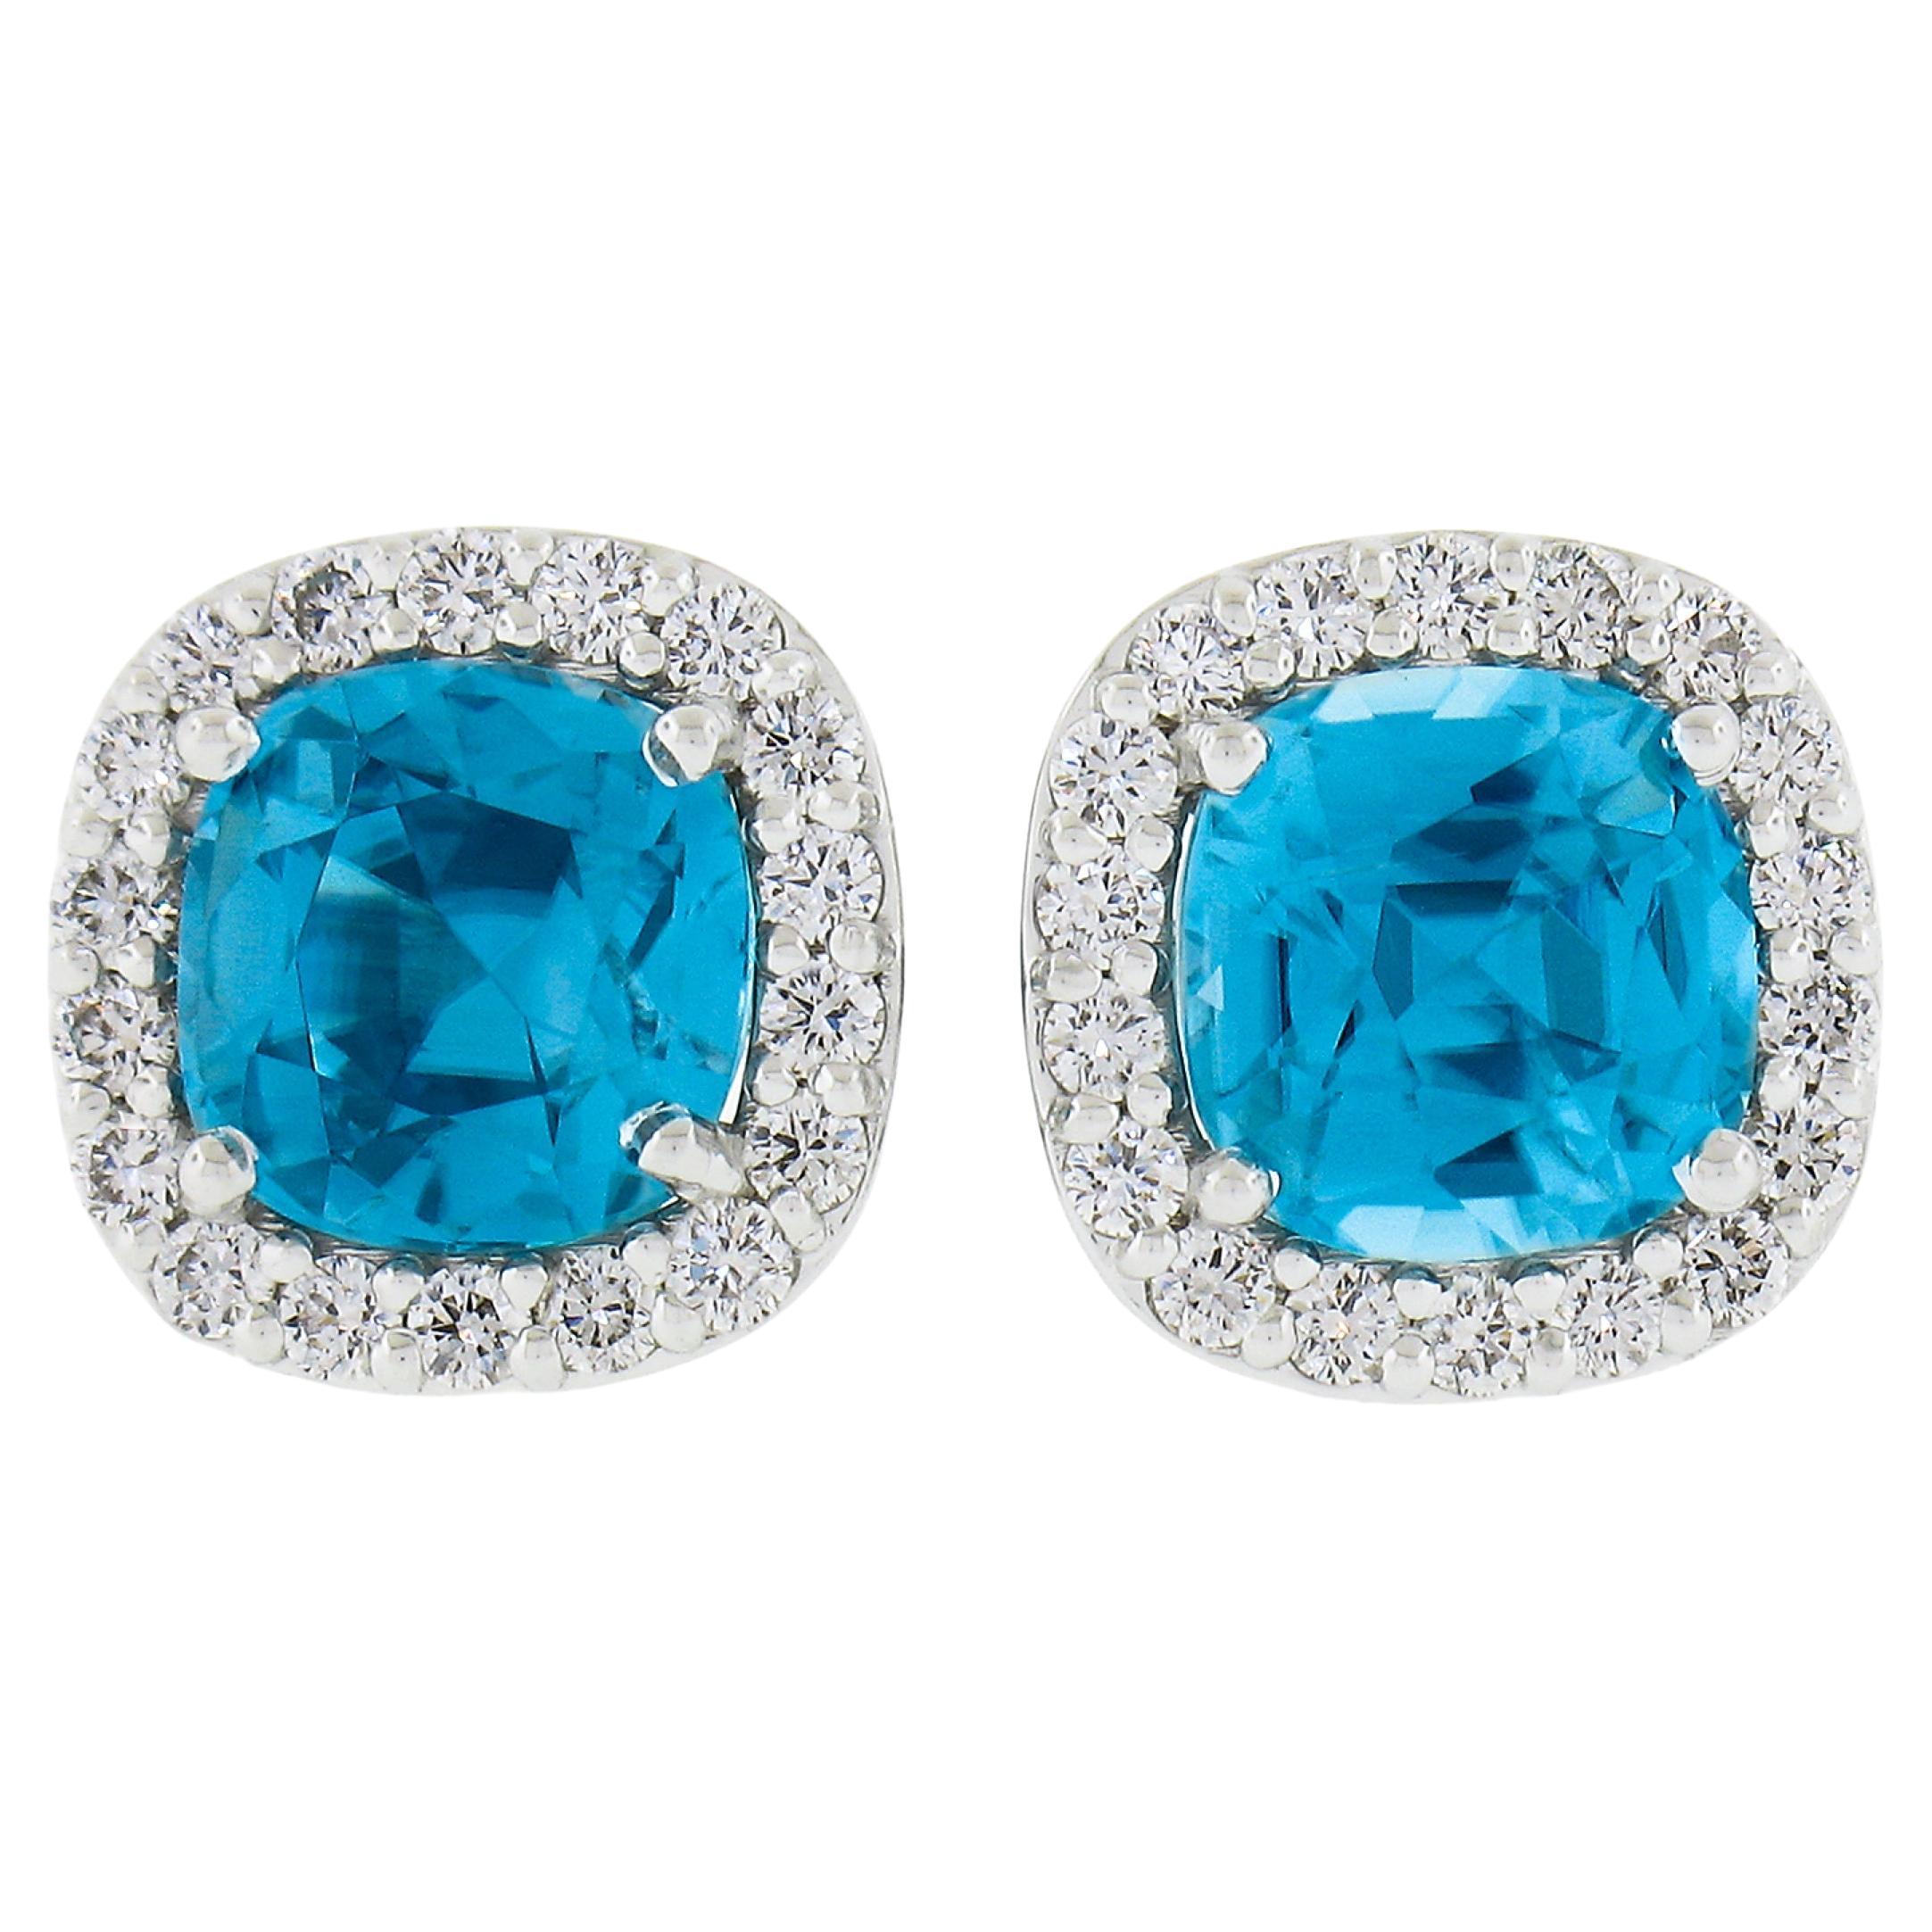 New 18k White Gold 5.61ctw Cushion Cut Blue Zircon & Diamond Halo Stud Earrings